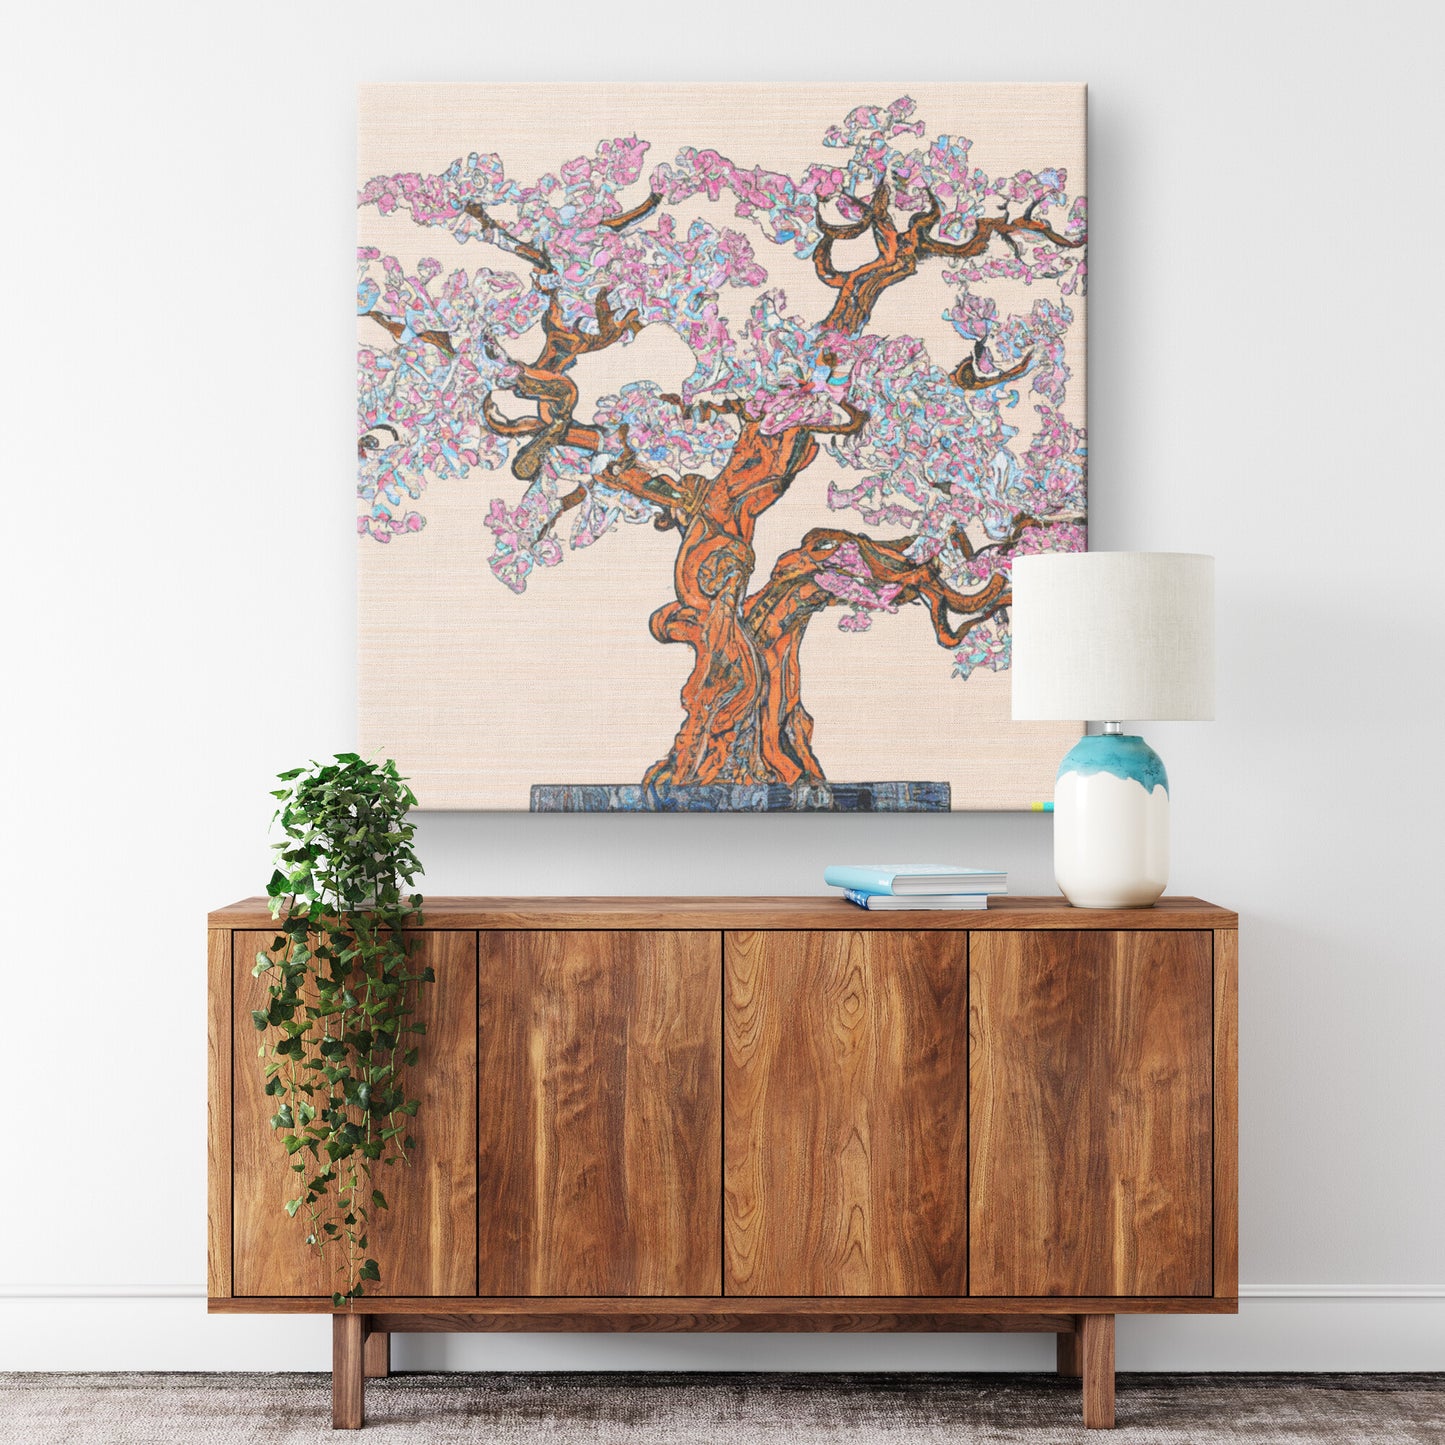 Japanese Nihonga Art, Wabi-Sabi Decor, Painting of a Cherry Tree